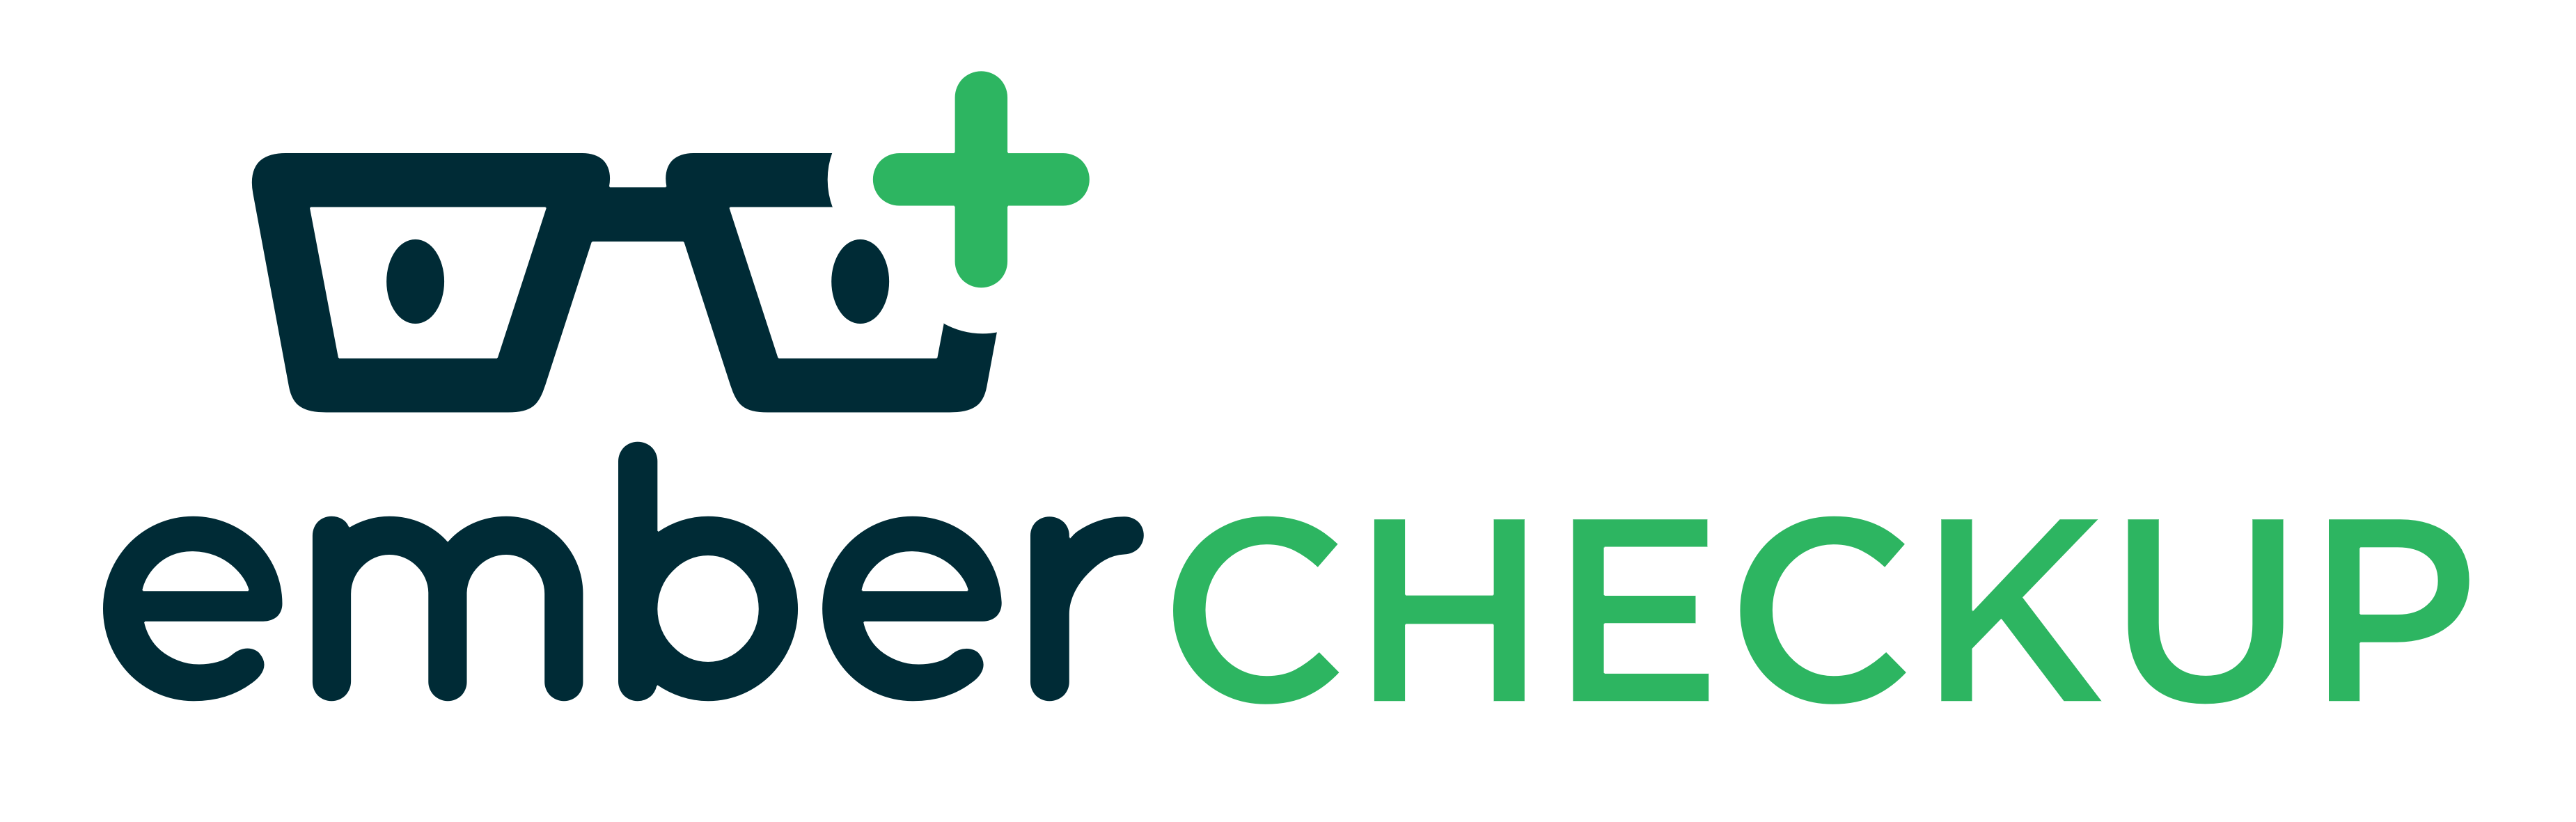 Ember Checkup logo